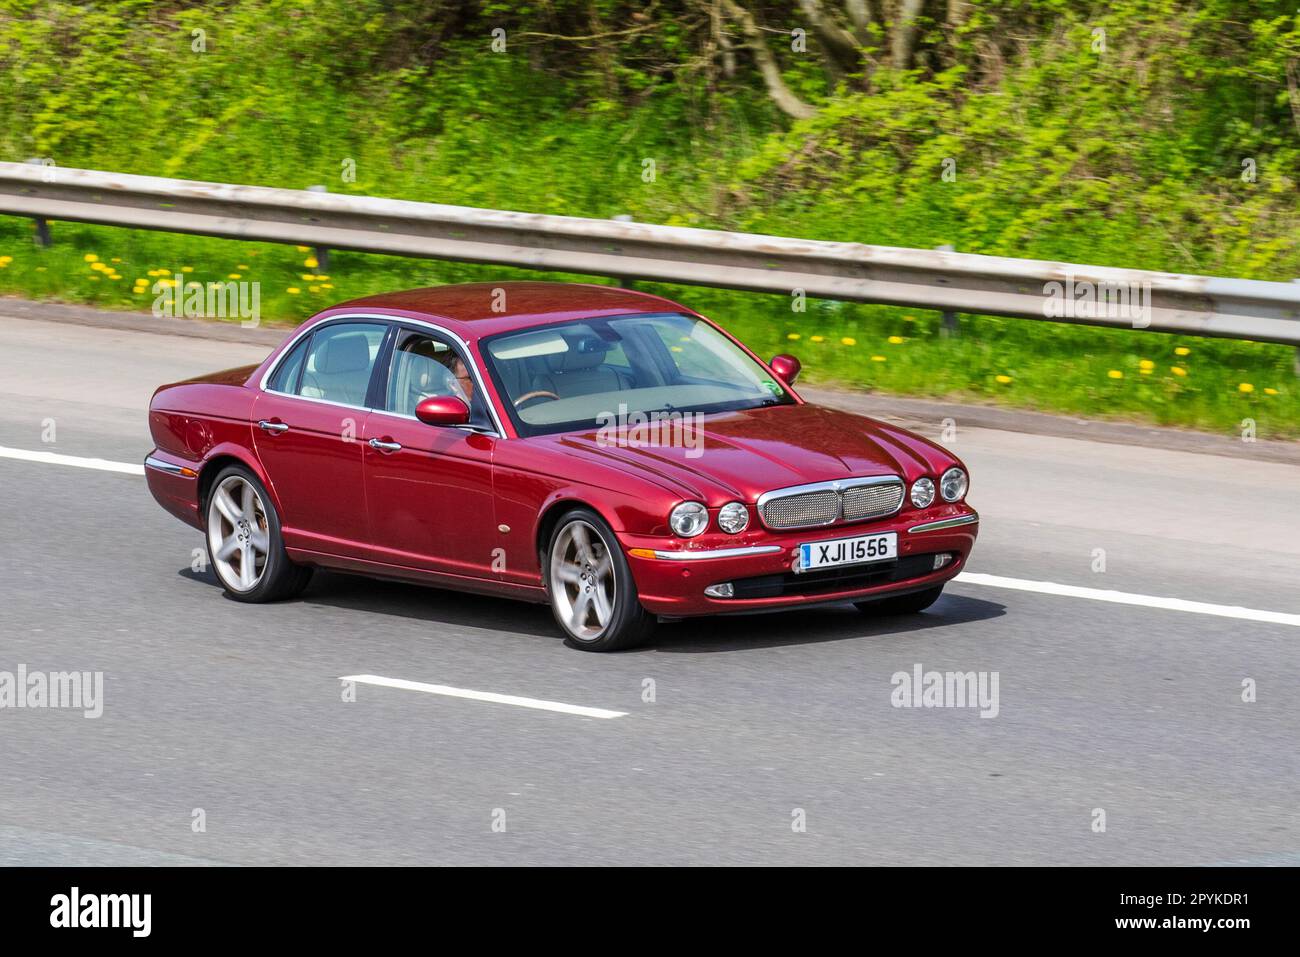 2007 Red British Jaguar XJ Sovereign Tdvi Auto;  travelling on the M61 motorway UK Stock Photo